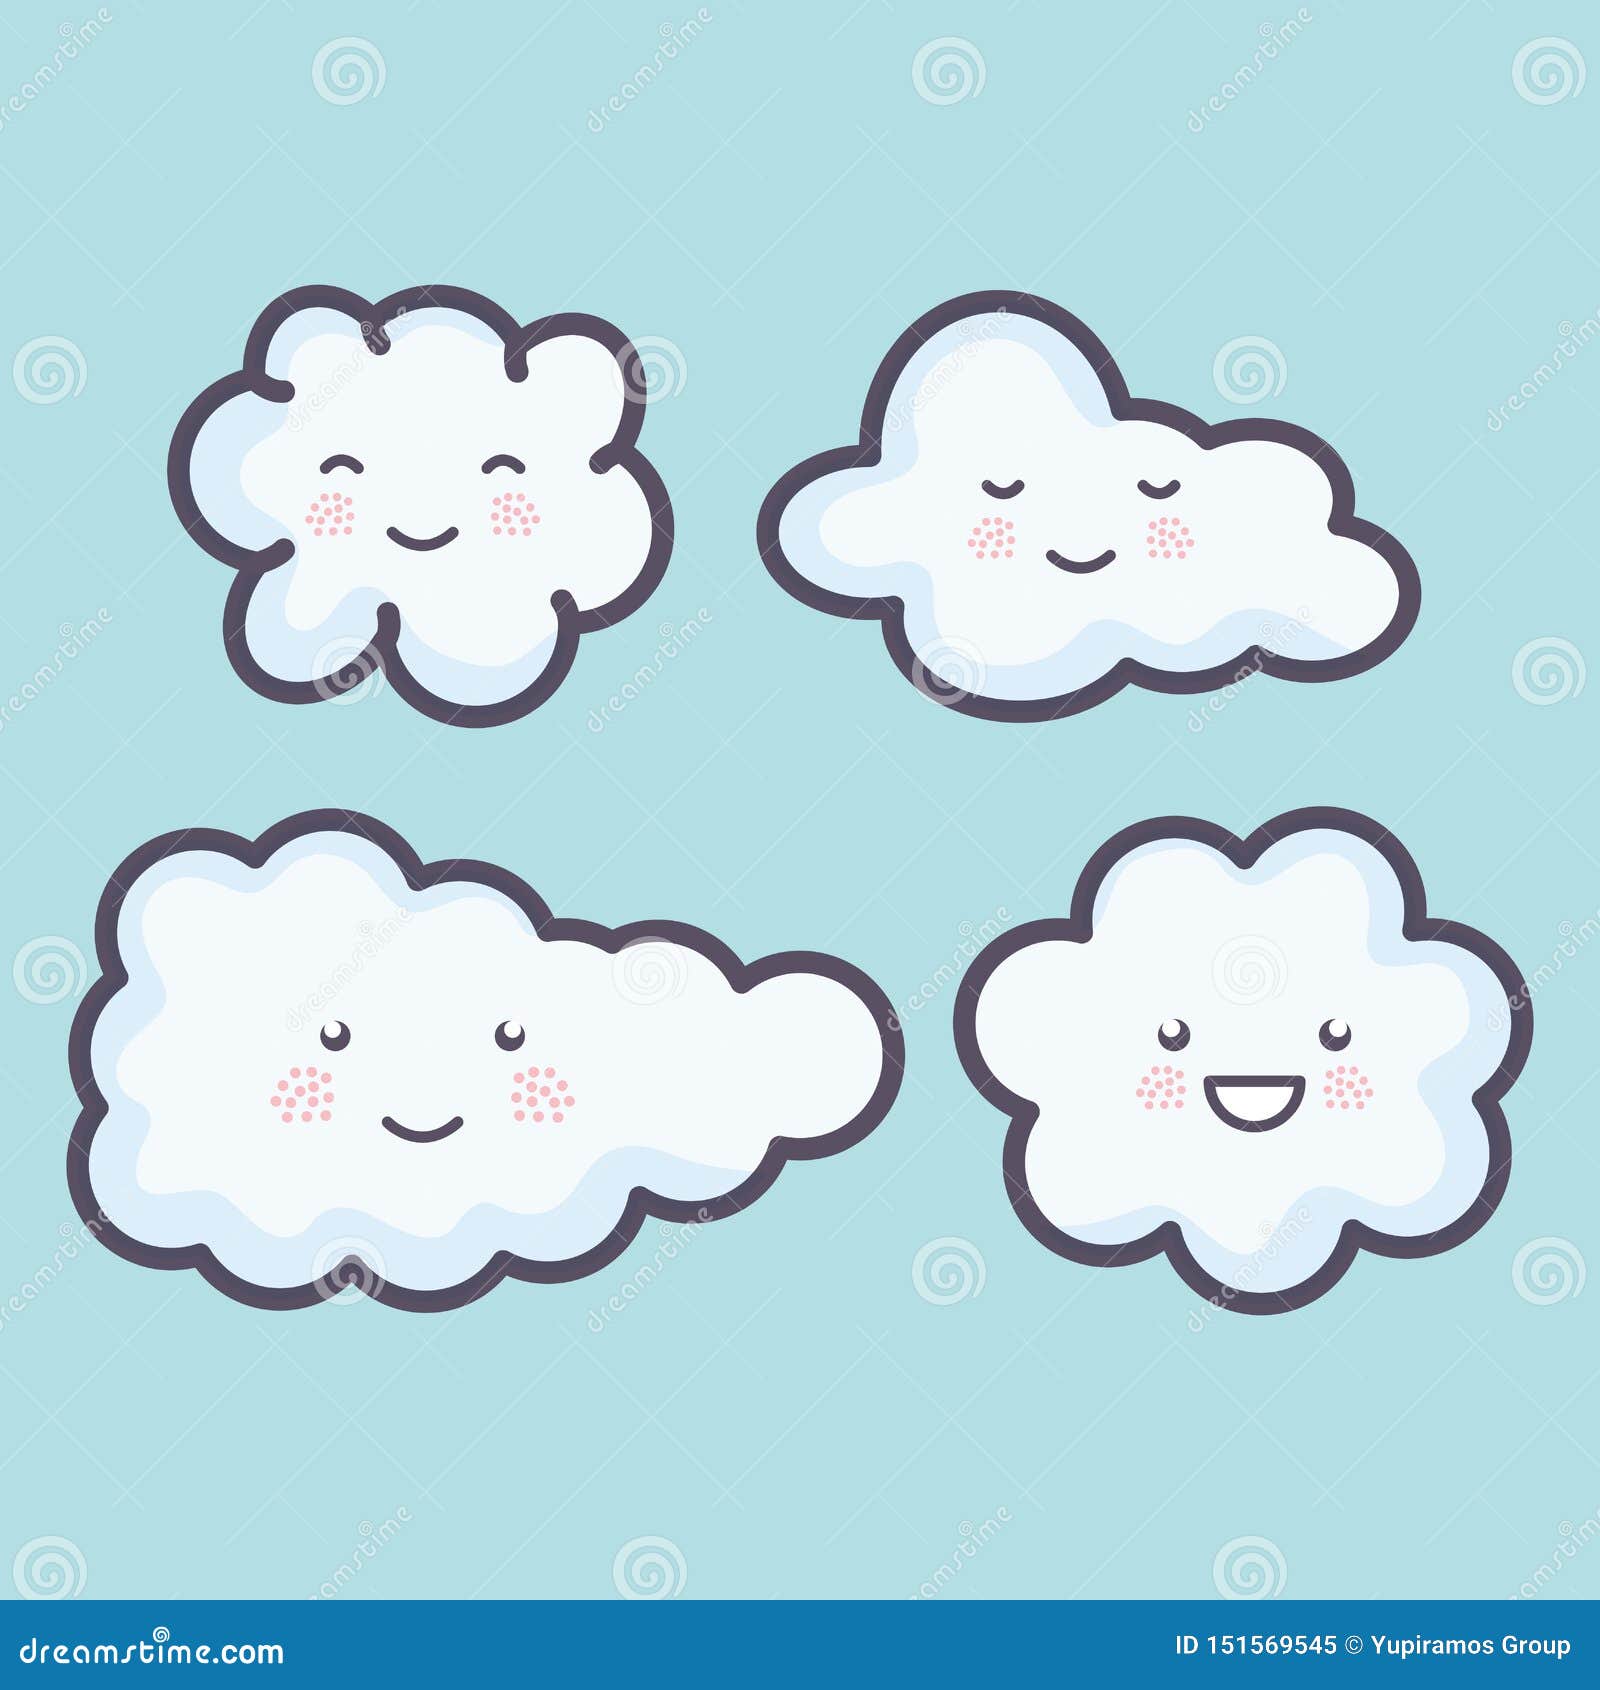 group of clouds sky weather kawaii characters